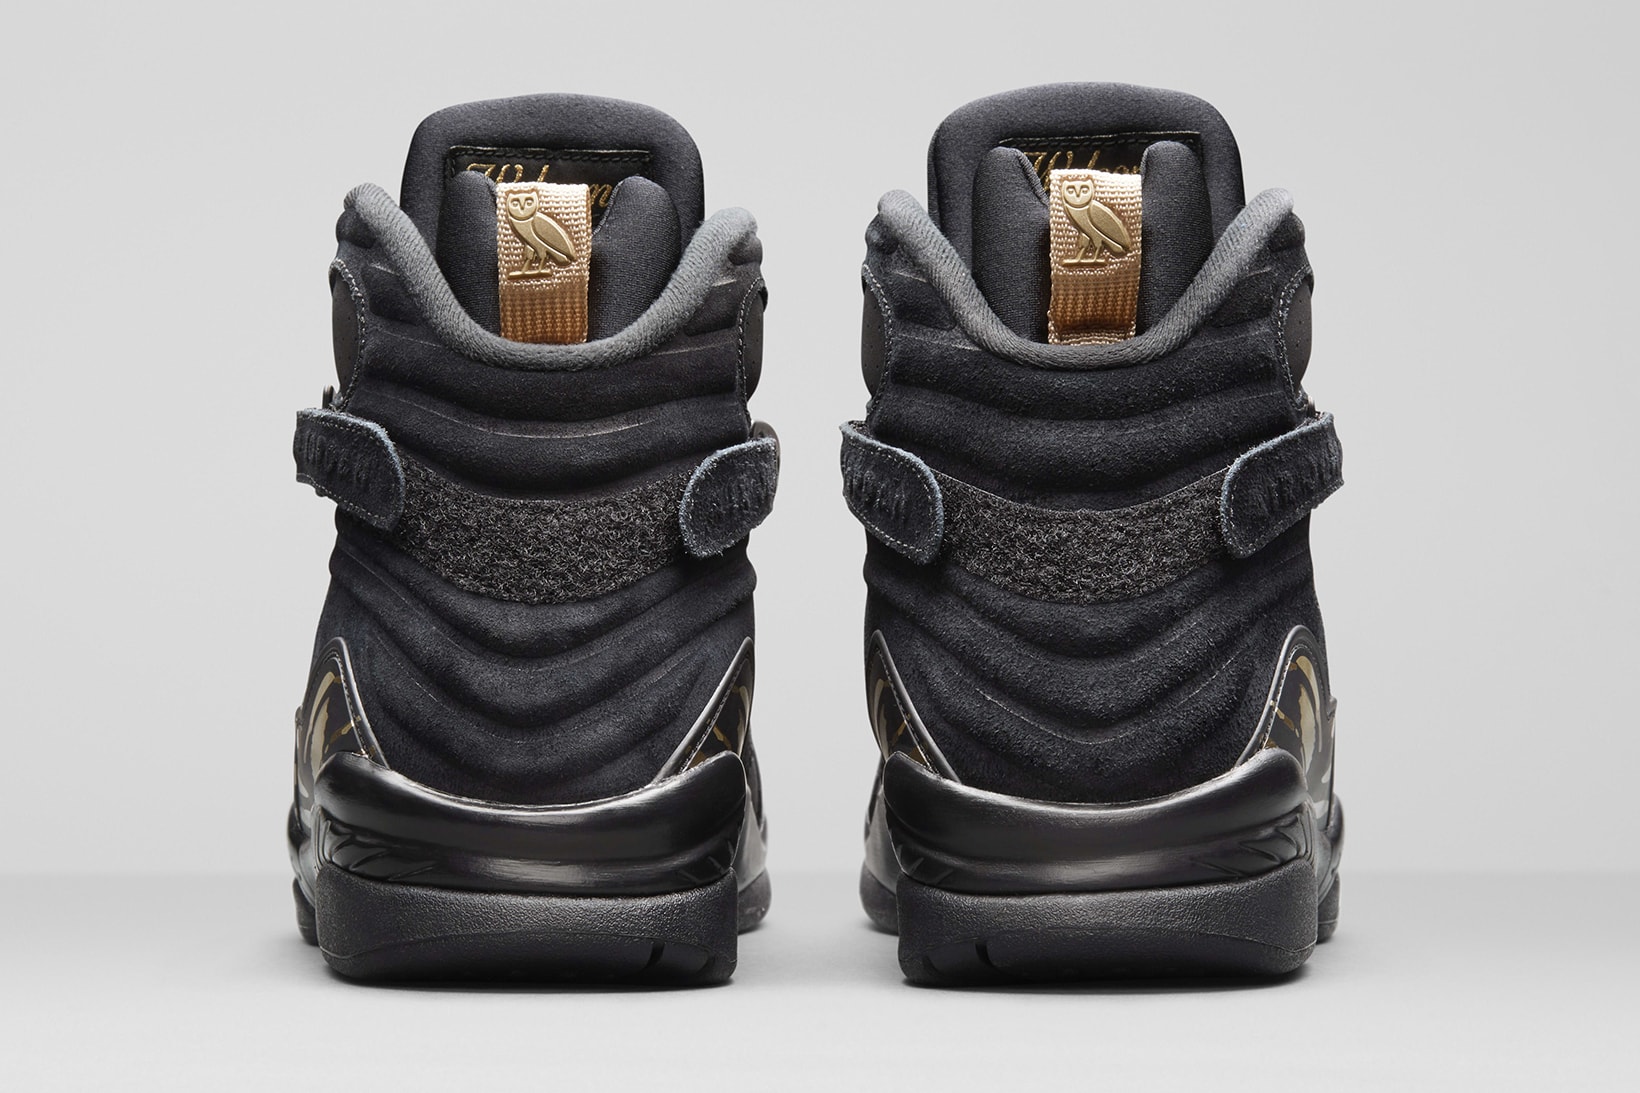 Drake OVO Air Jordan 8 Retro Black and White Sneakers Mens Shoes release info date drops February 16 2018